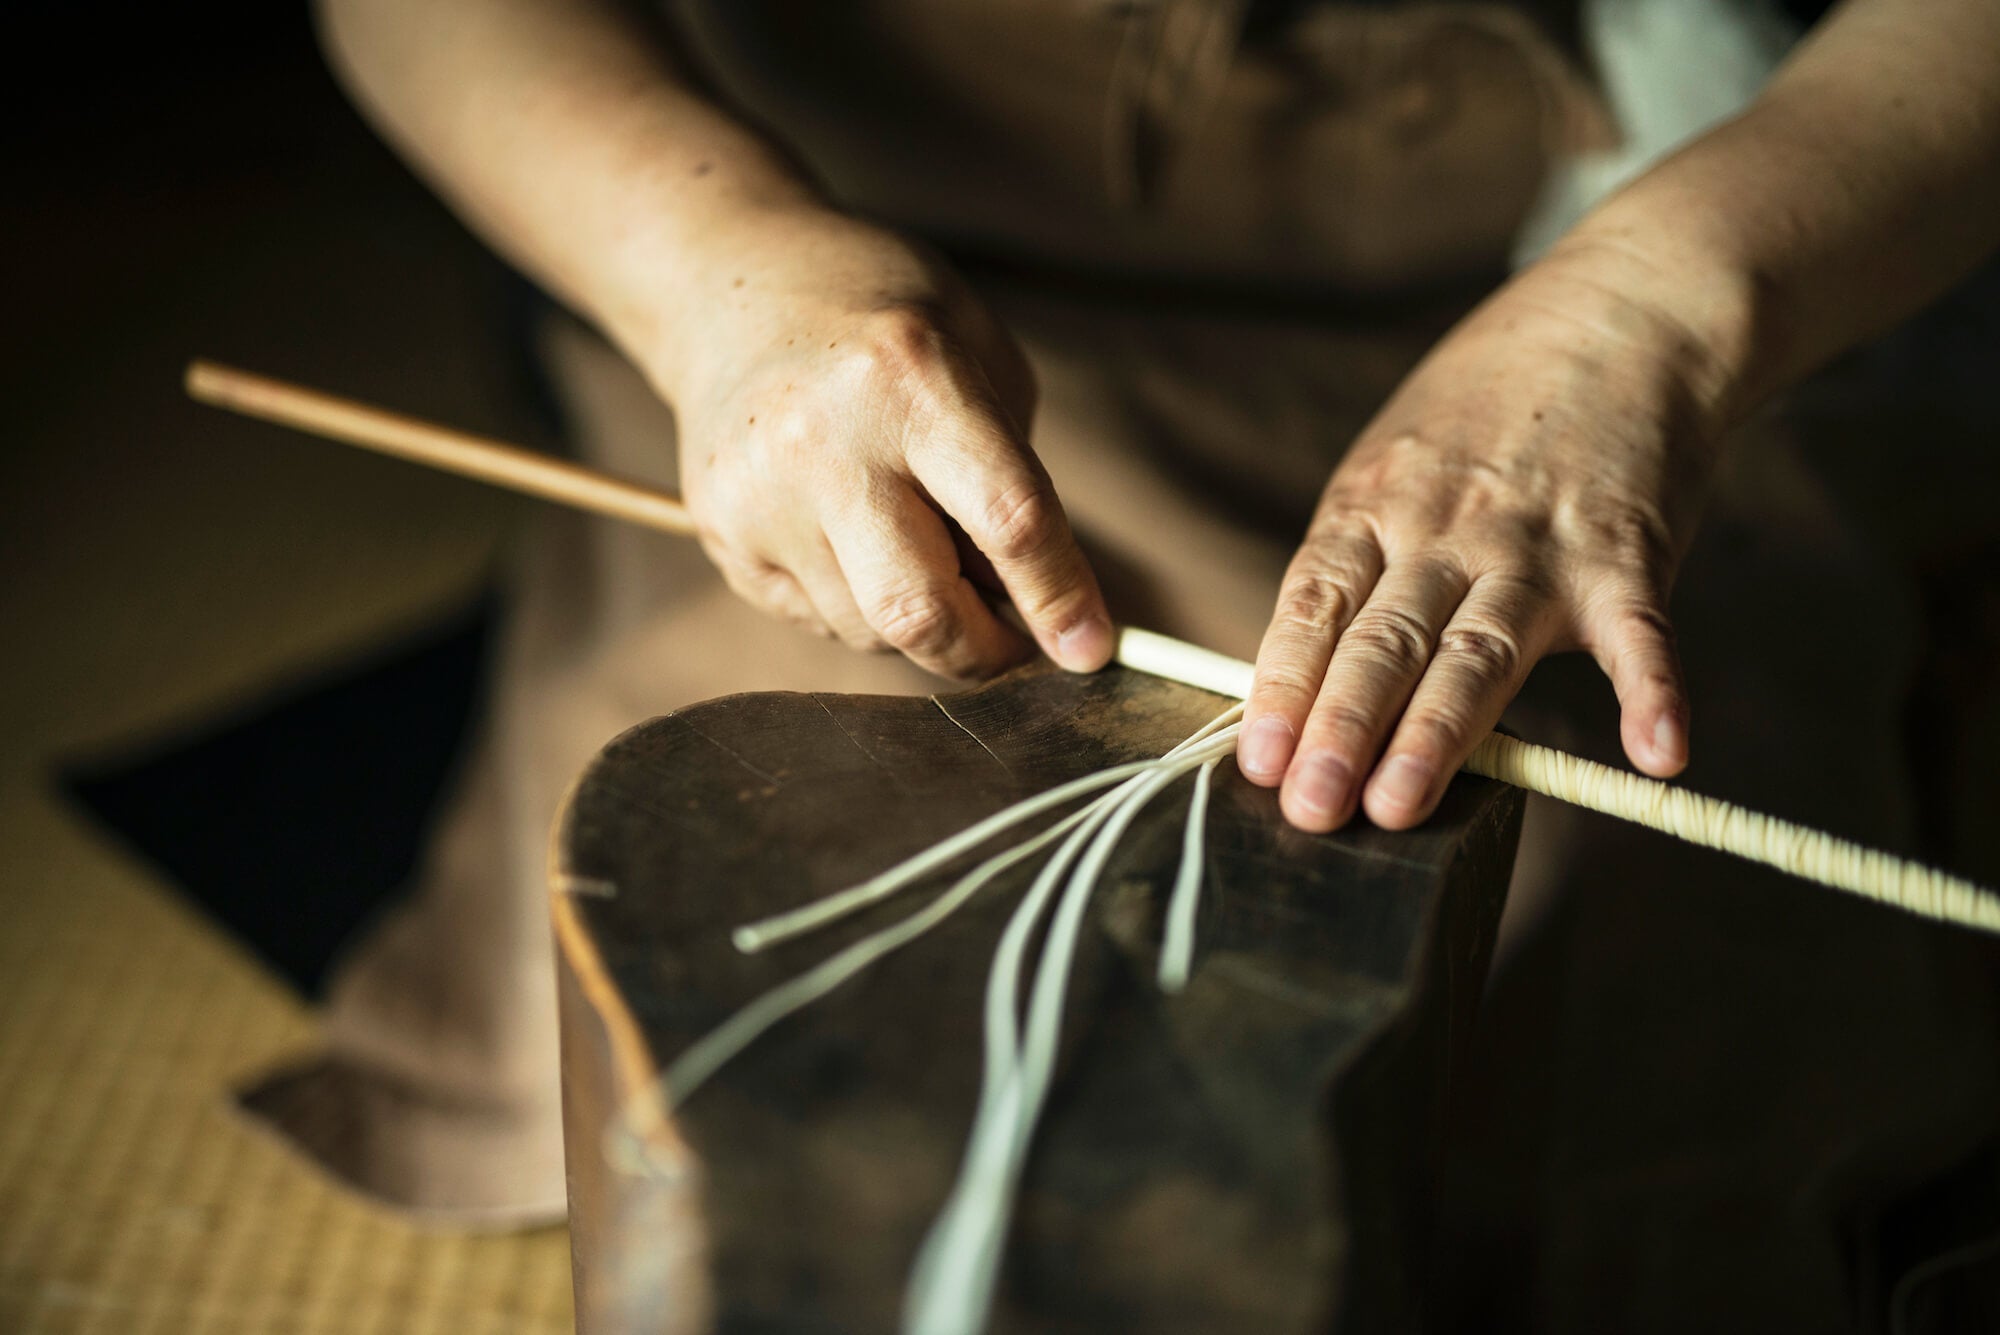 Takazawa artisan in Japan making a candle wick